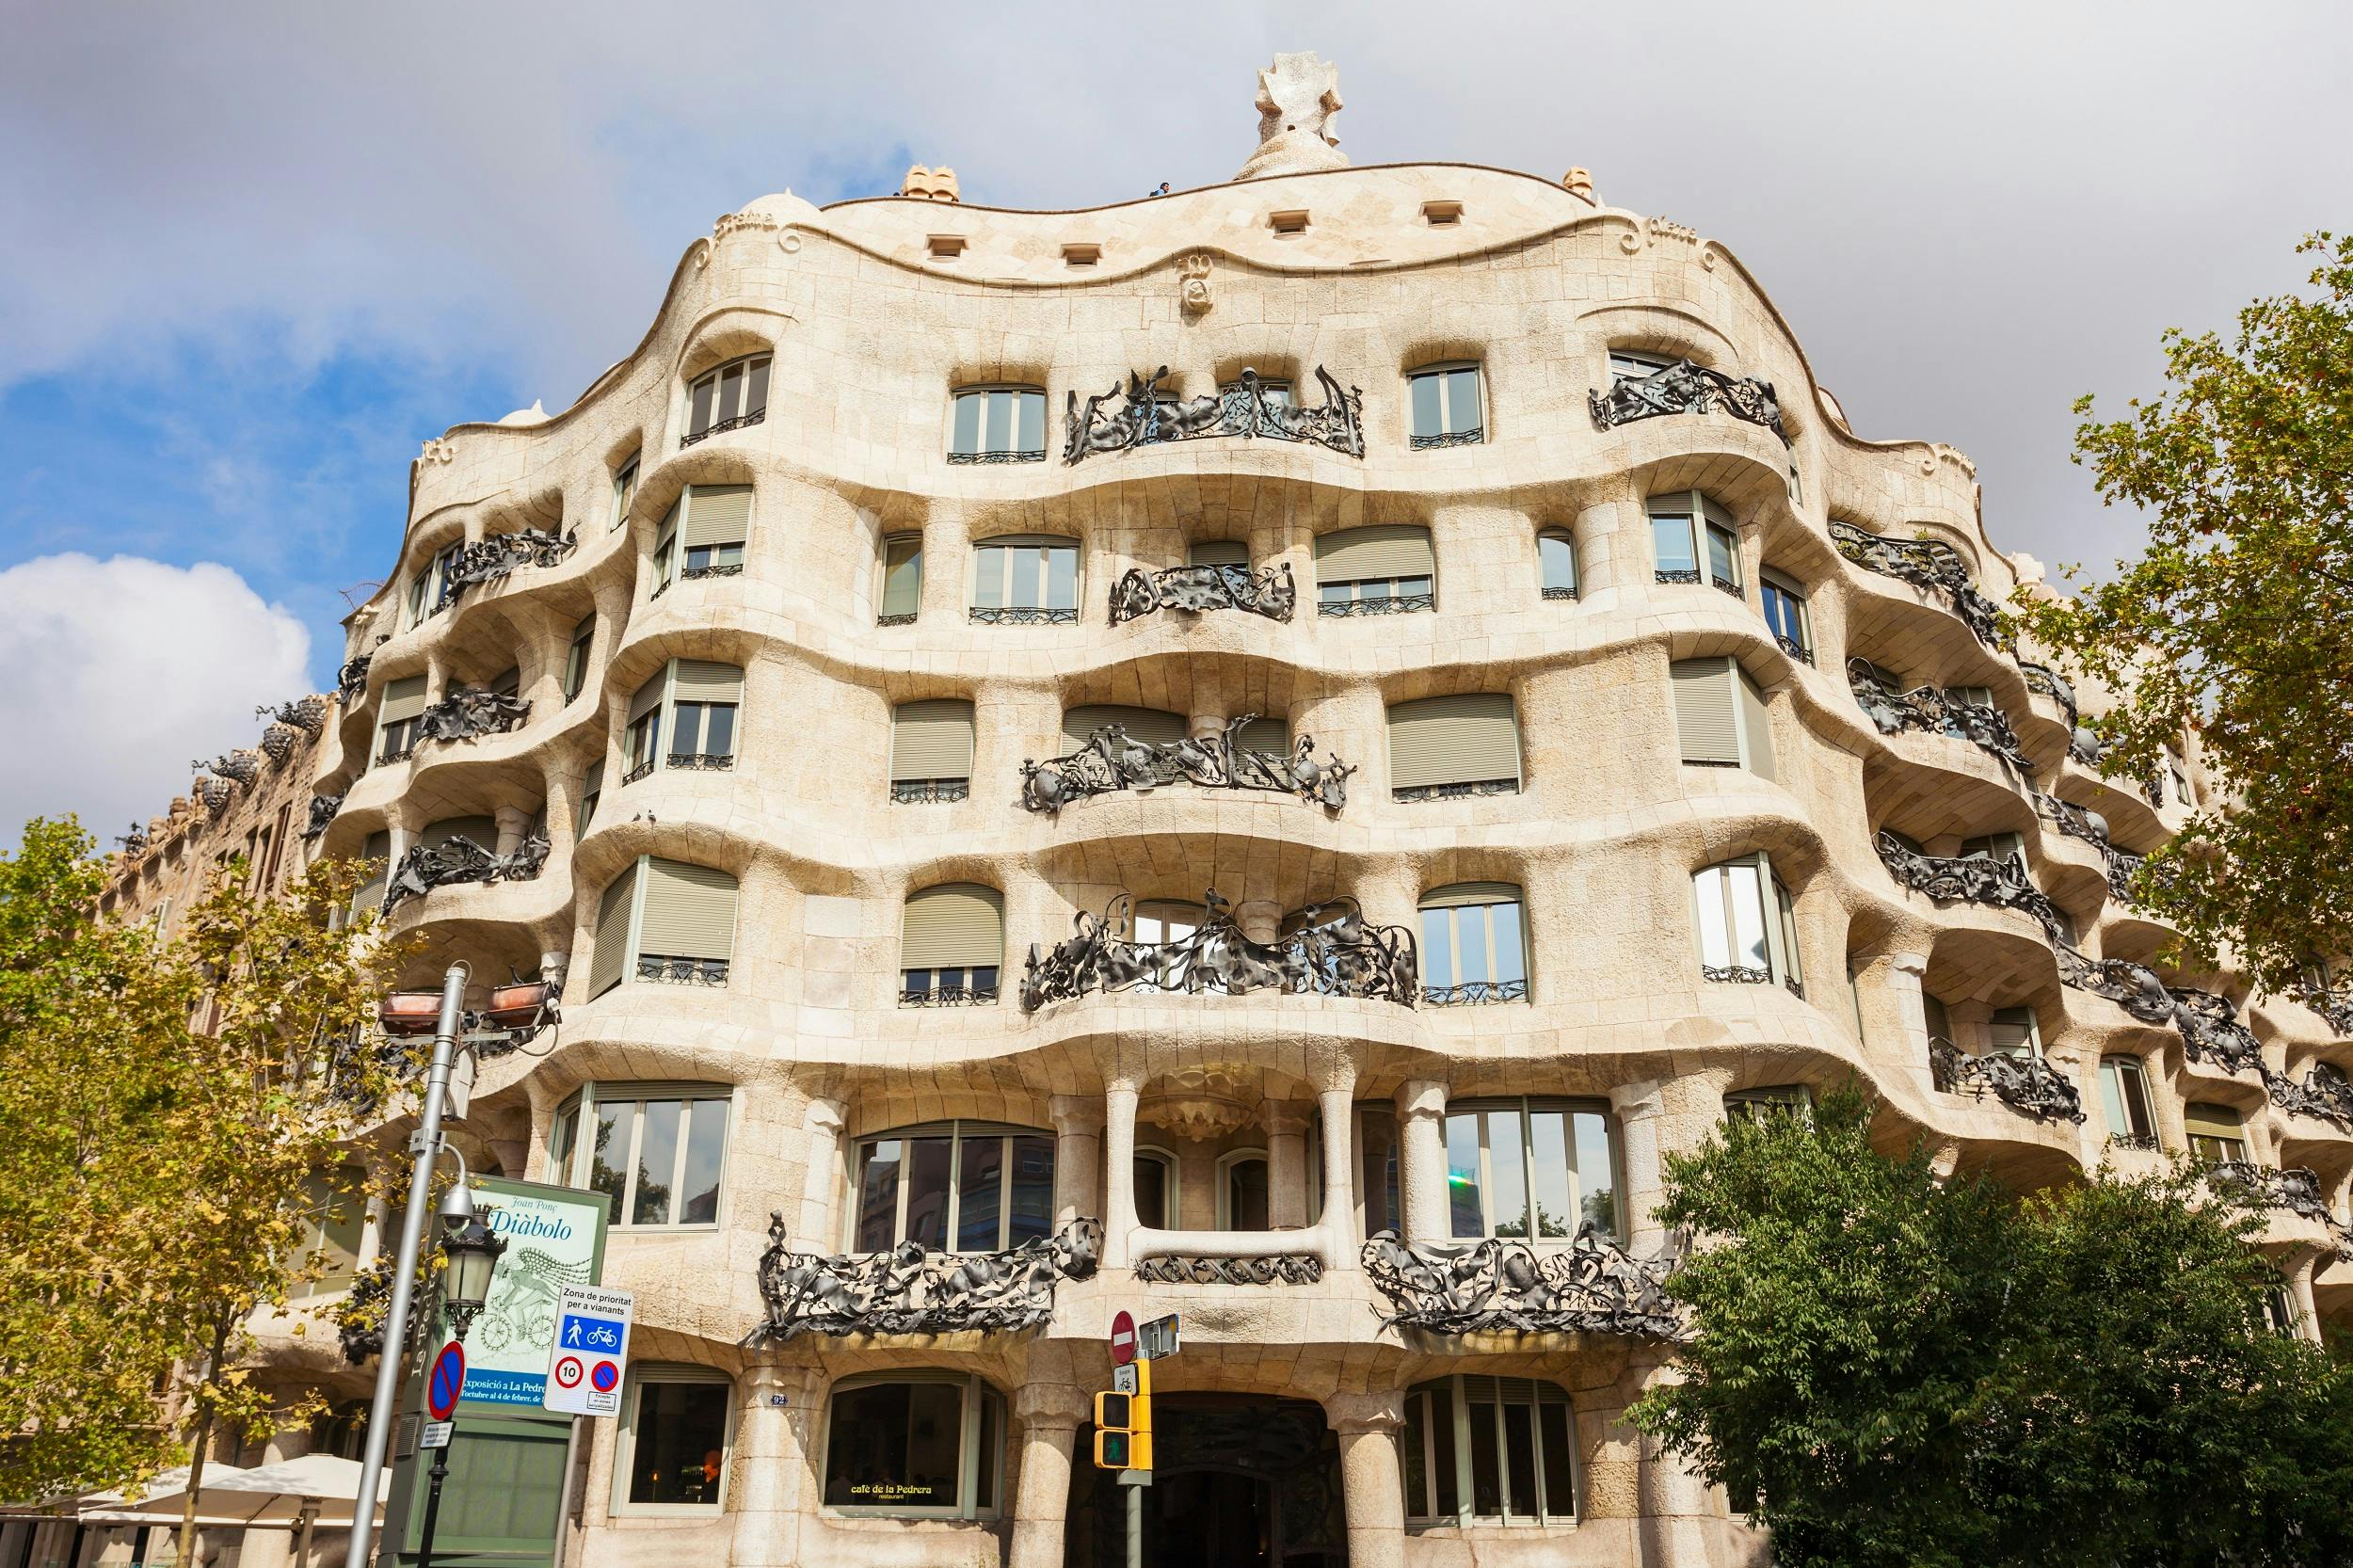 Gaudis Modernist Tour in Barcelona